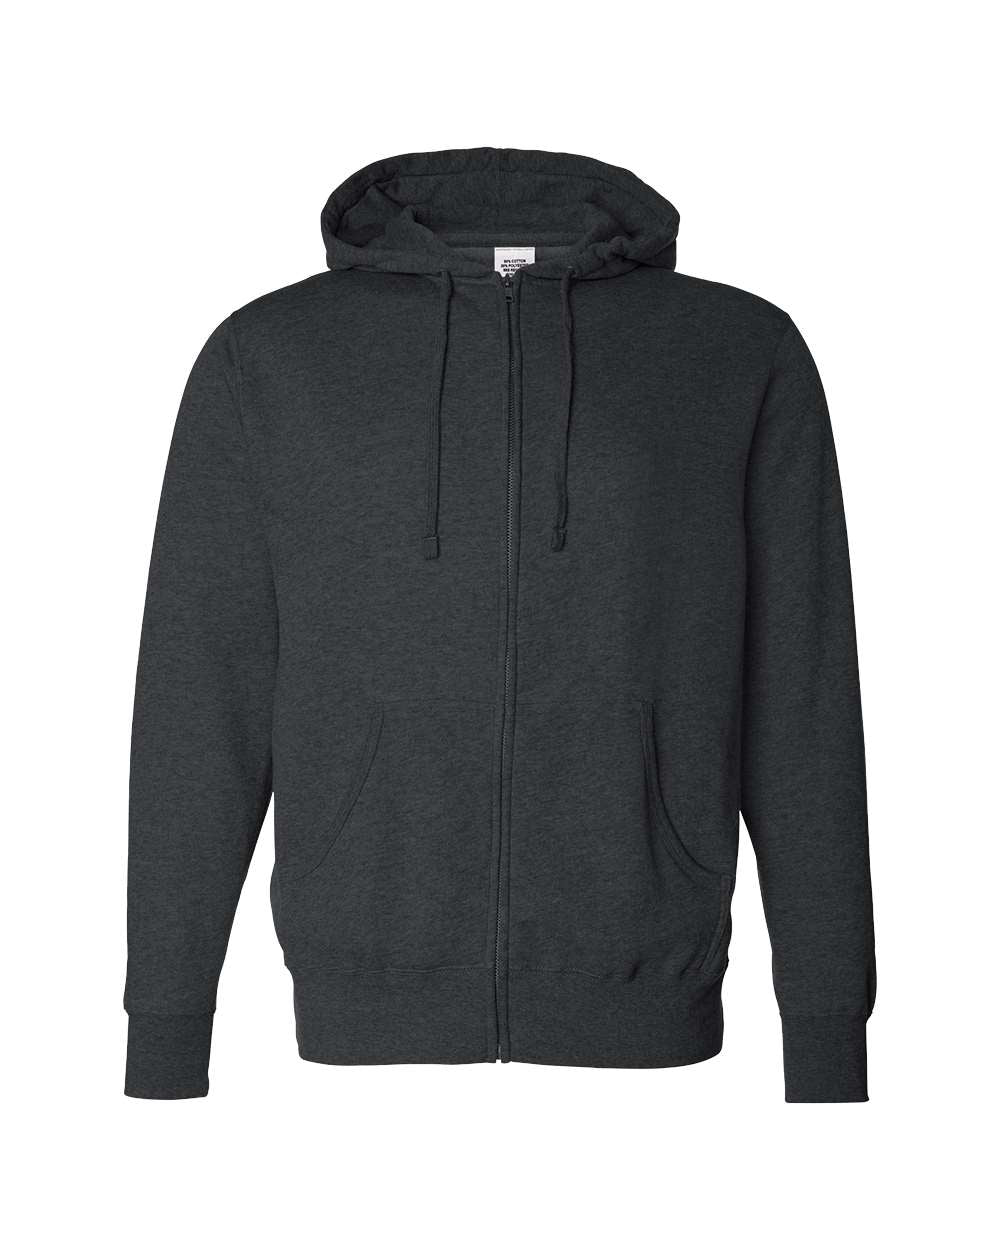 Independent Trading Co. - Full-Zip Hooded Sweatshirt